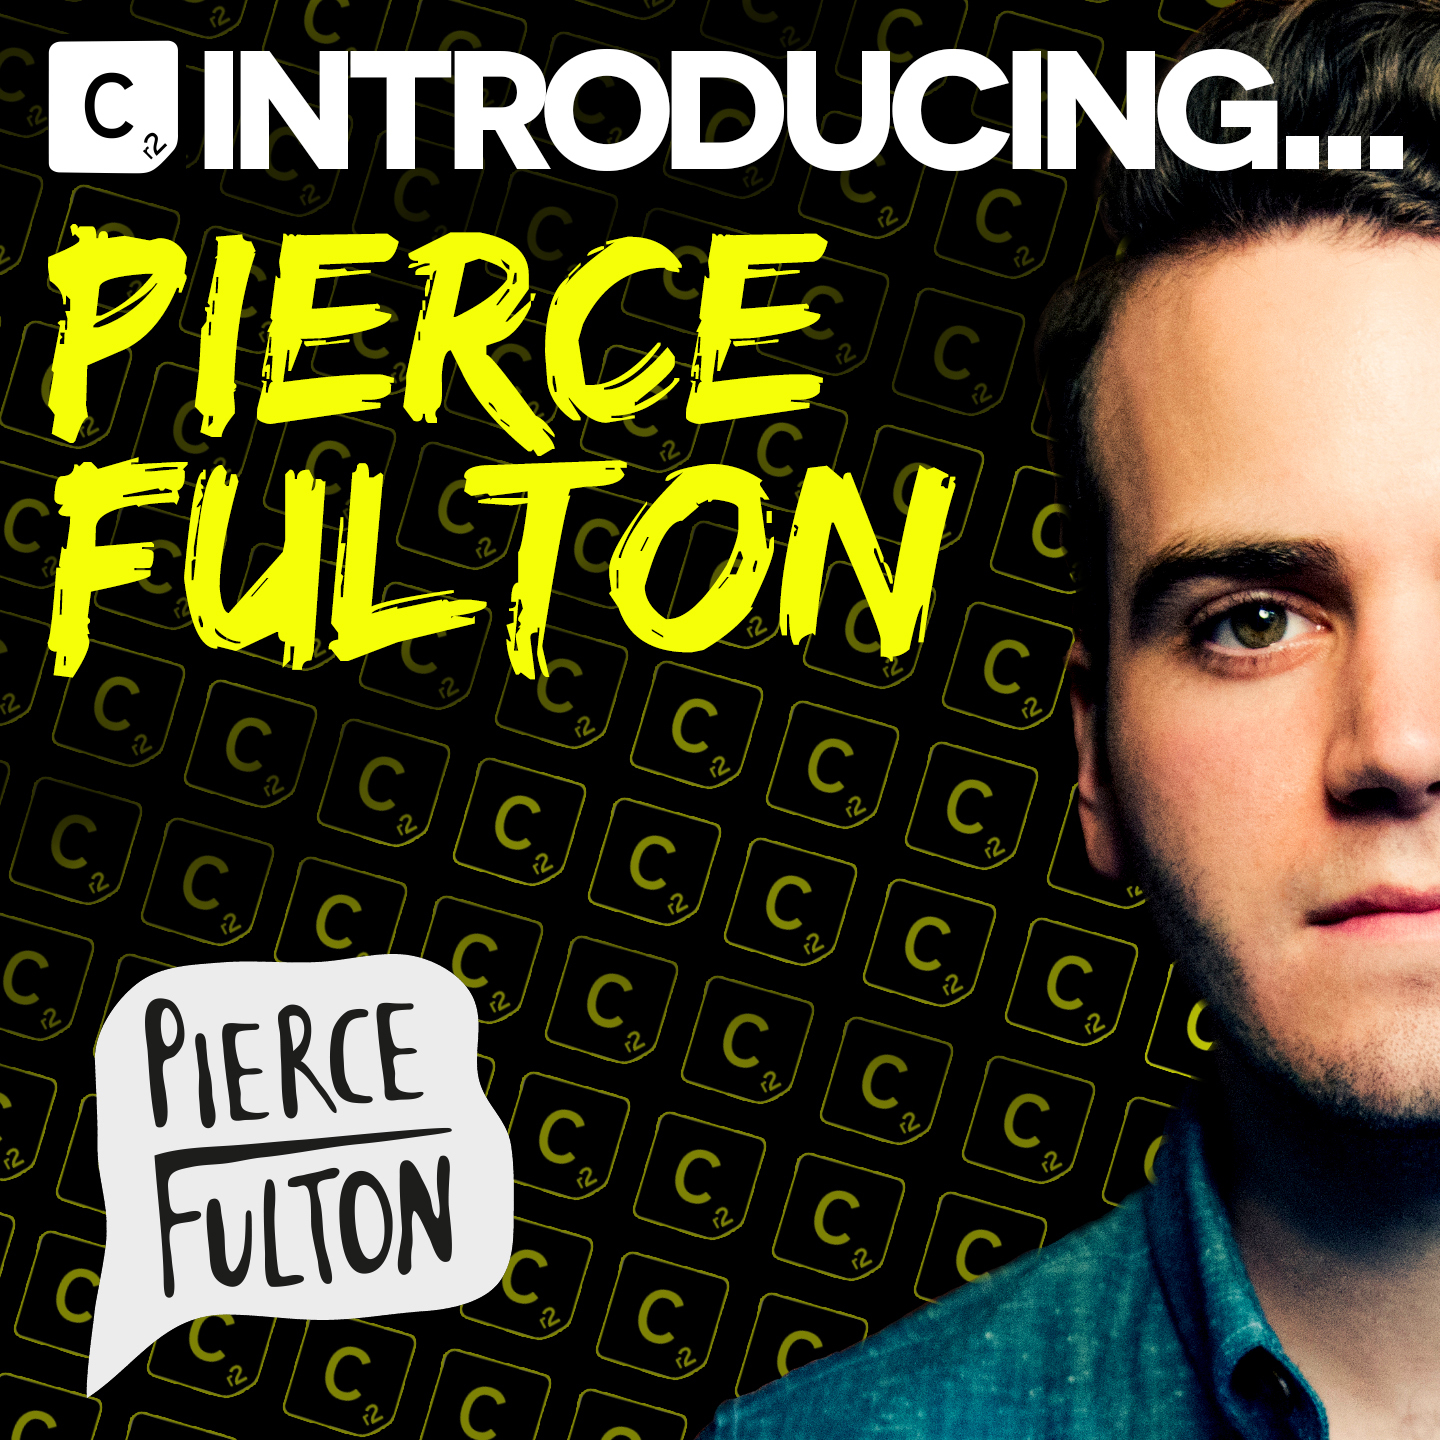 Introducing Pierce Fulton